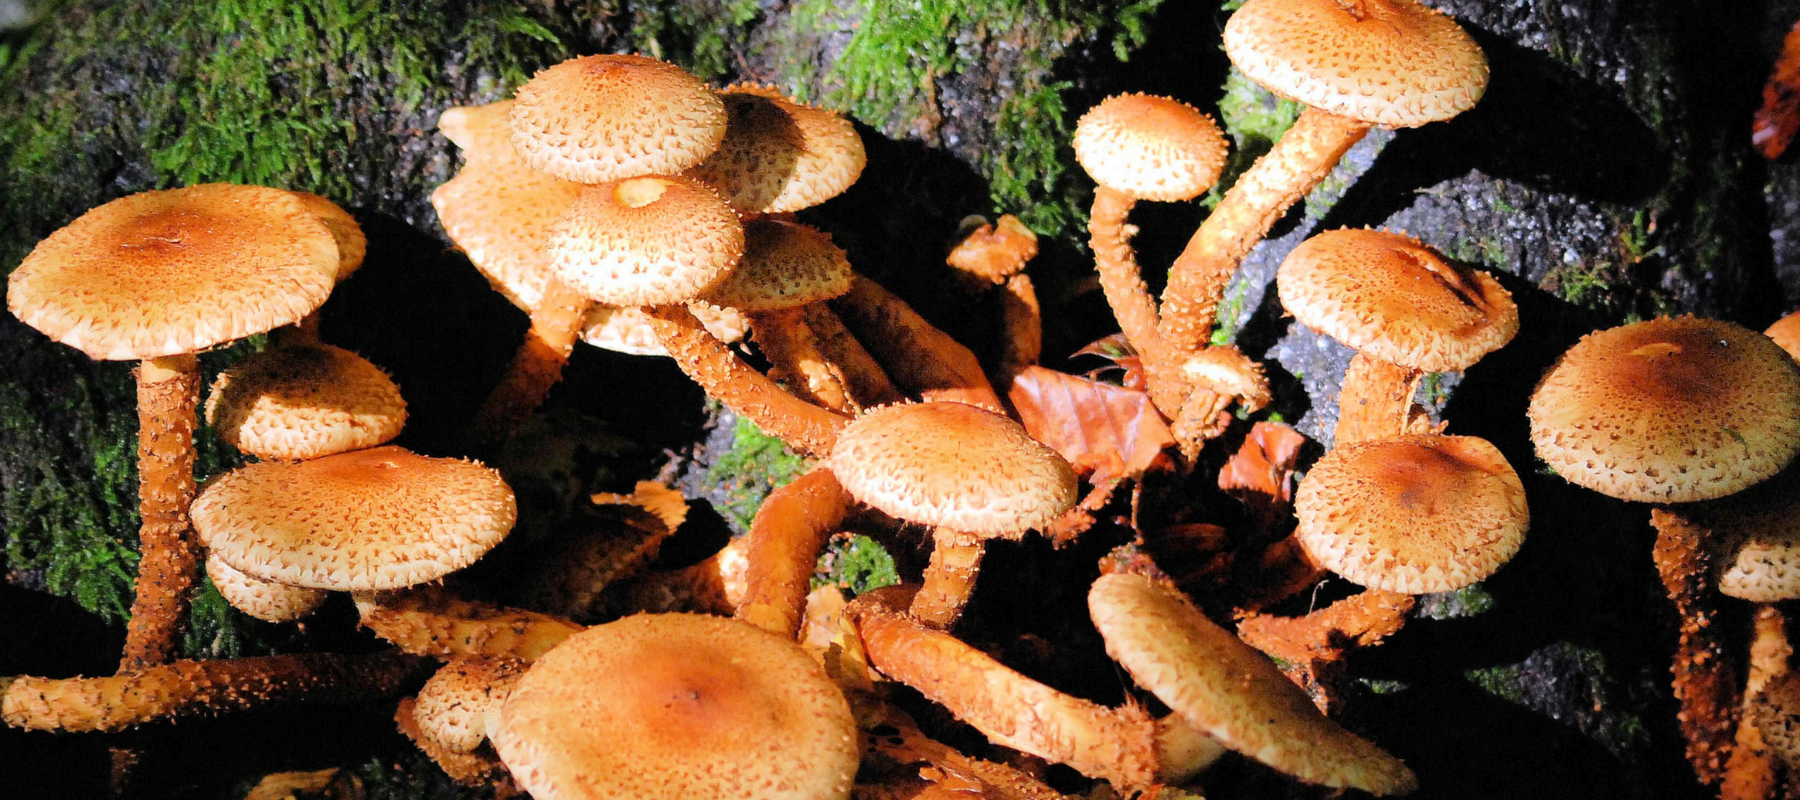 Fungi and soil creation